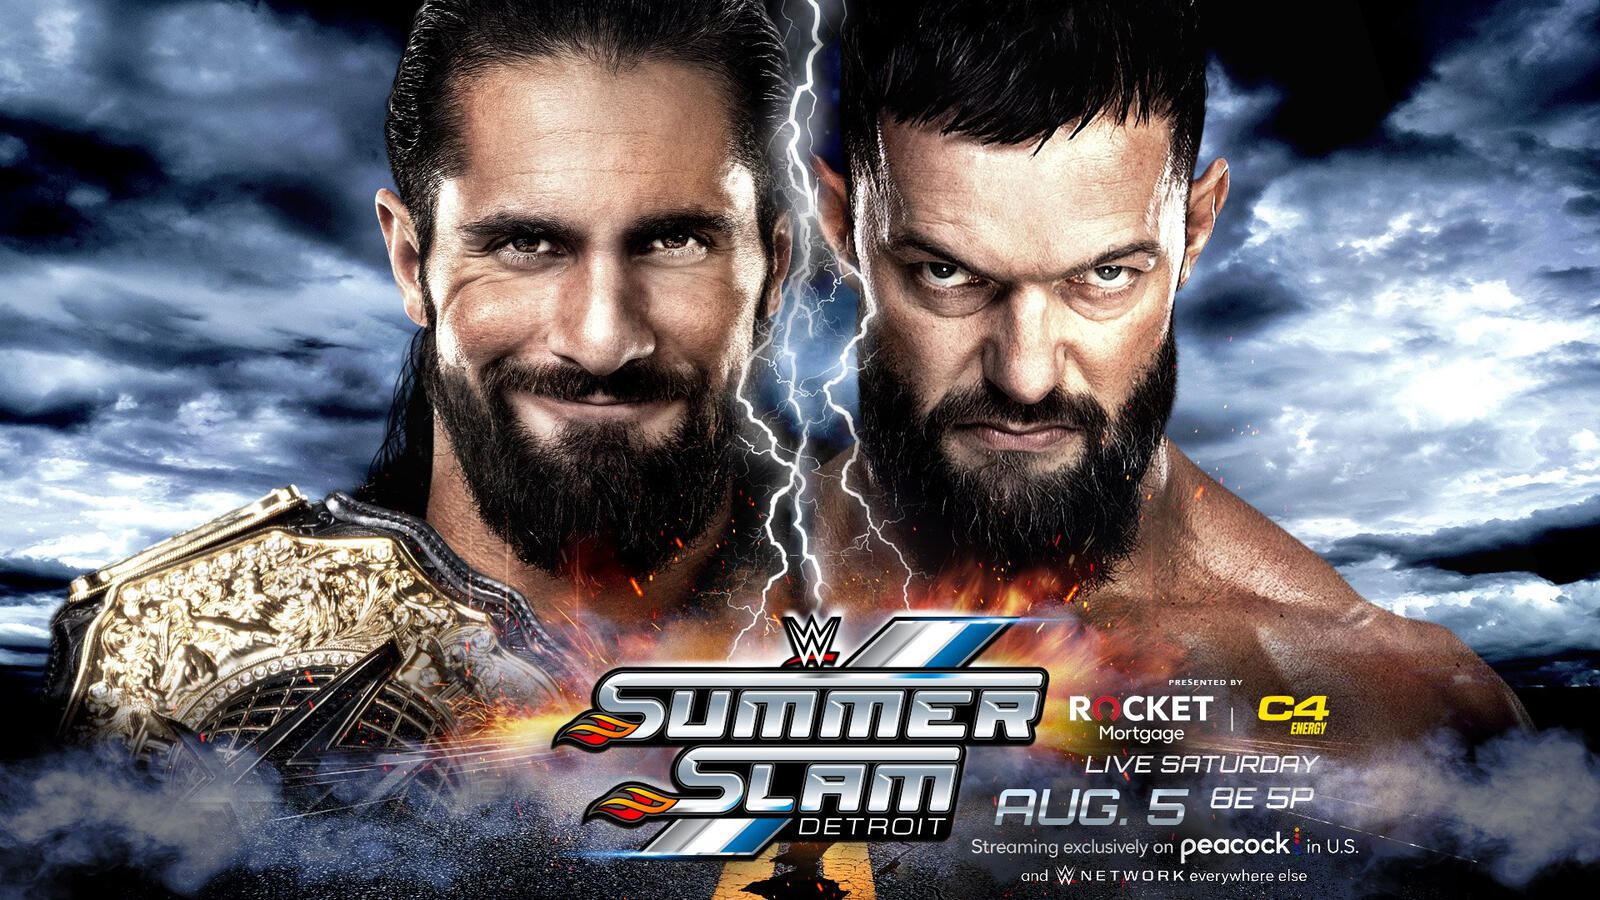 Seth Rollins Vs Finn Balor Announced For WWE SummerSlam